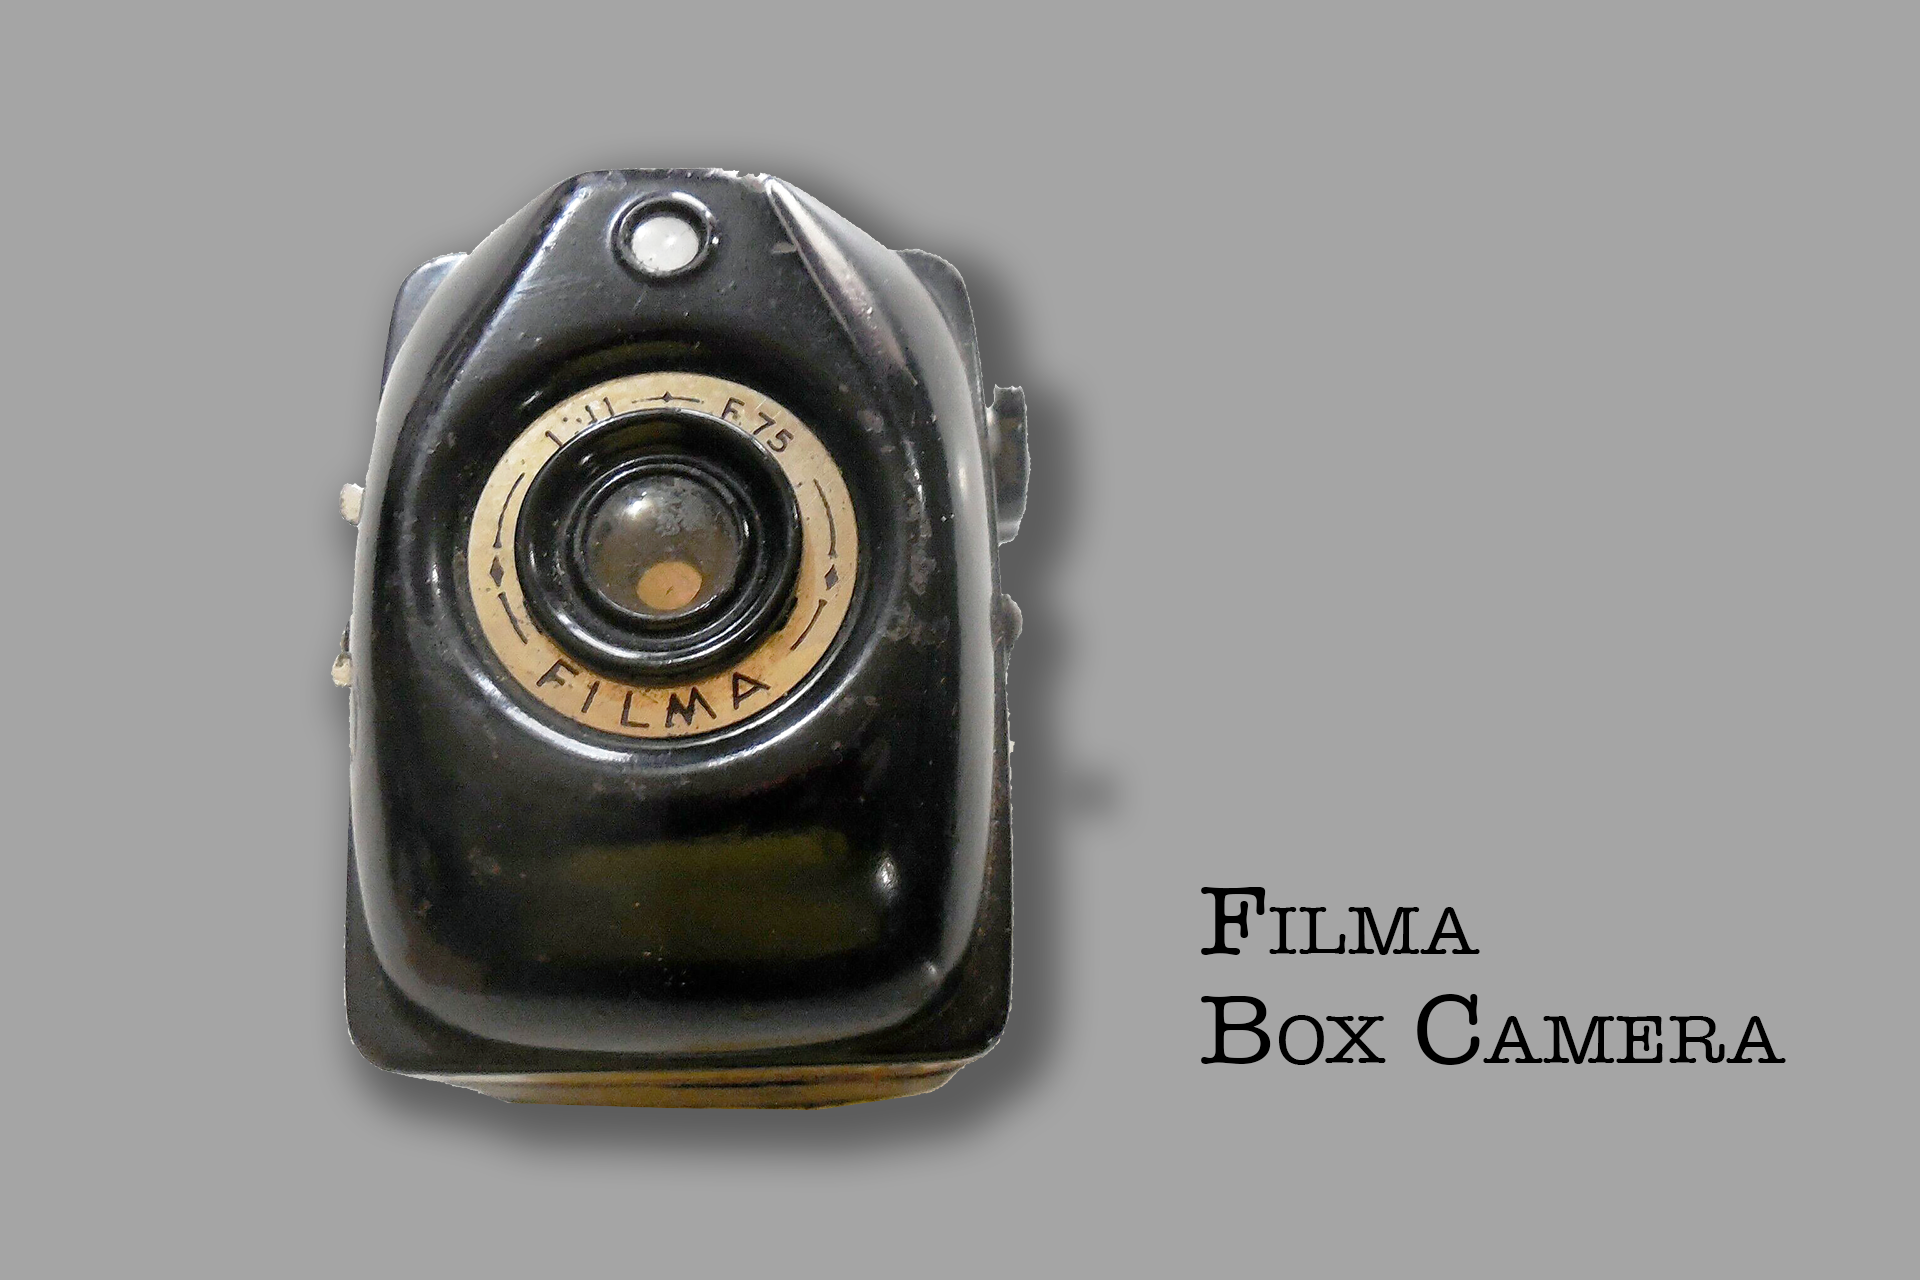 1920x1280px-FILMA-Box-camera-vWA24